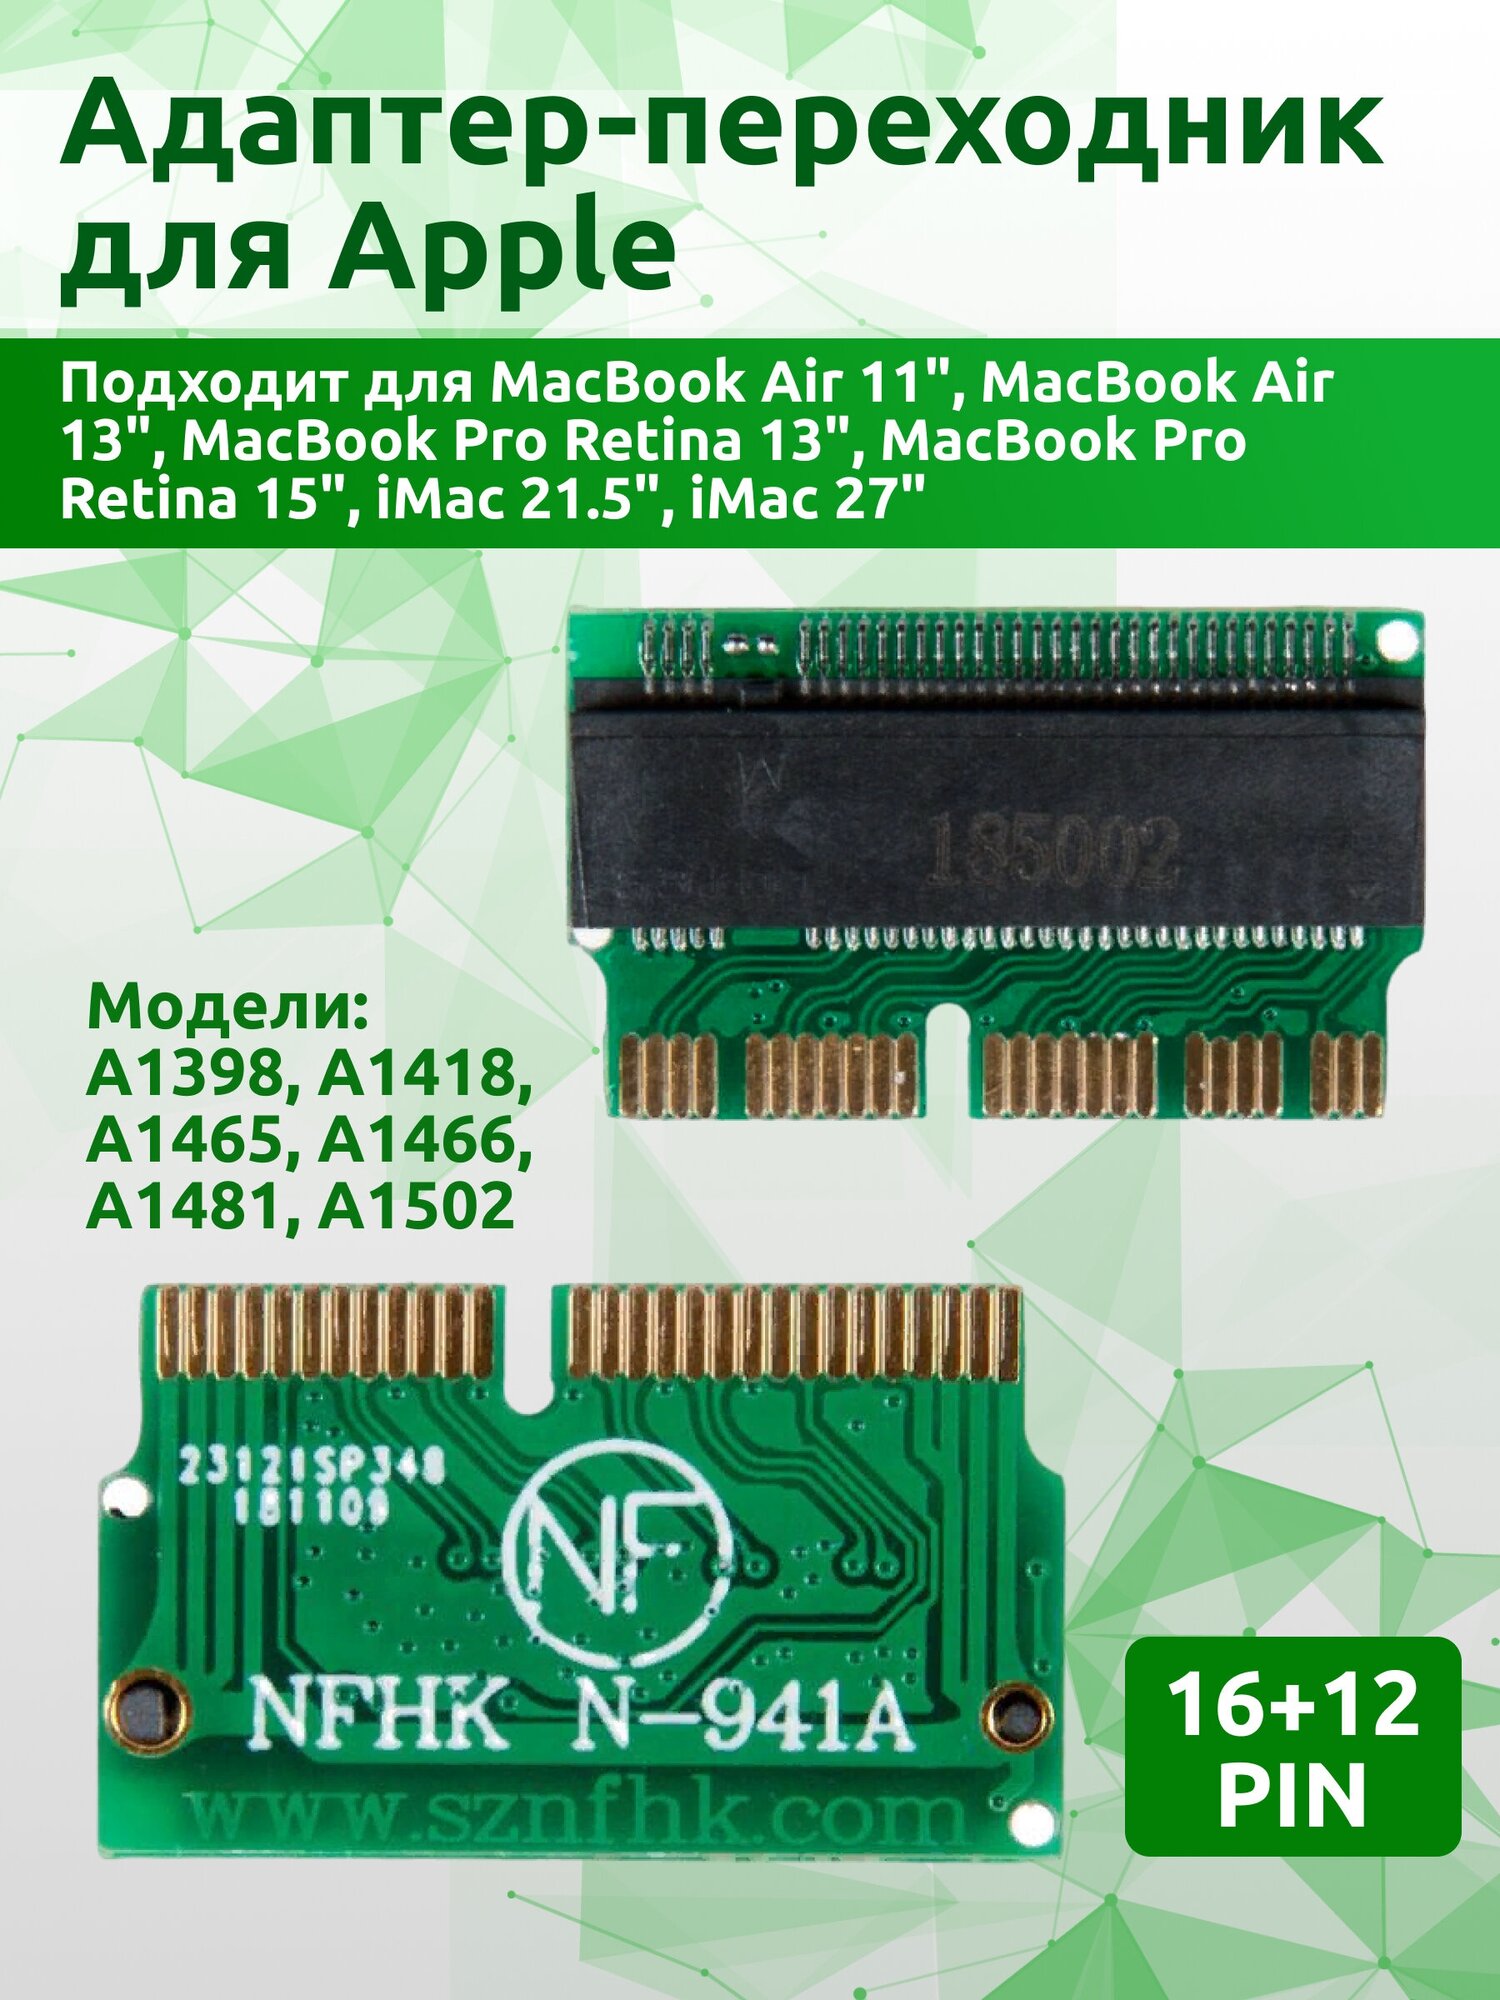 Адаптер-переходник M.2 (NGFF) / SSD - iMac A1419, A1418 2013-2017/ MacBook Air A1465 A1466 Mid 2013 - Mid 2017\ MacBook Pro Retina A1502 A1398 Late 2013 - Mid 2015, (12+16pin)